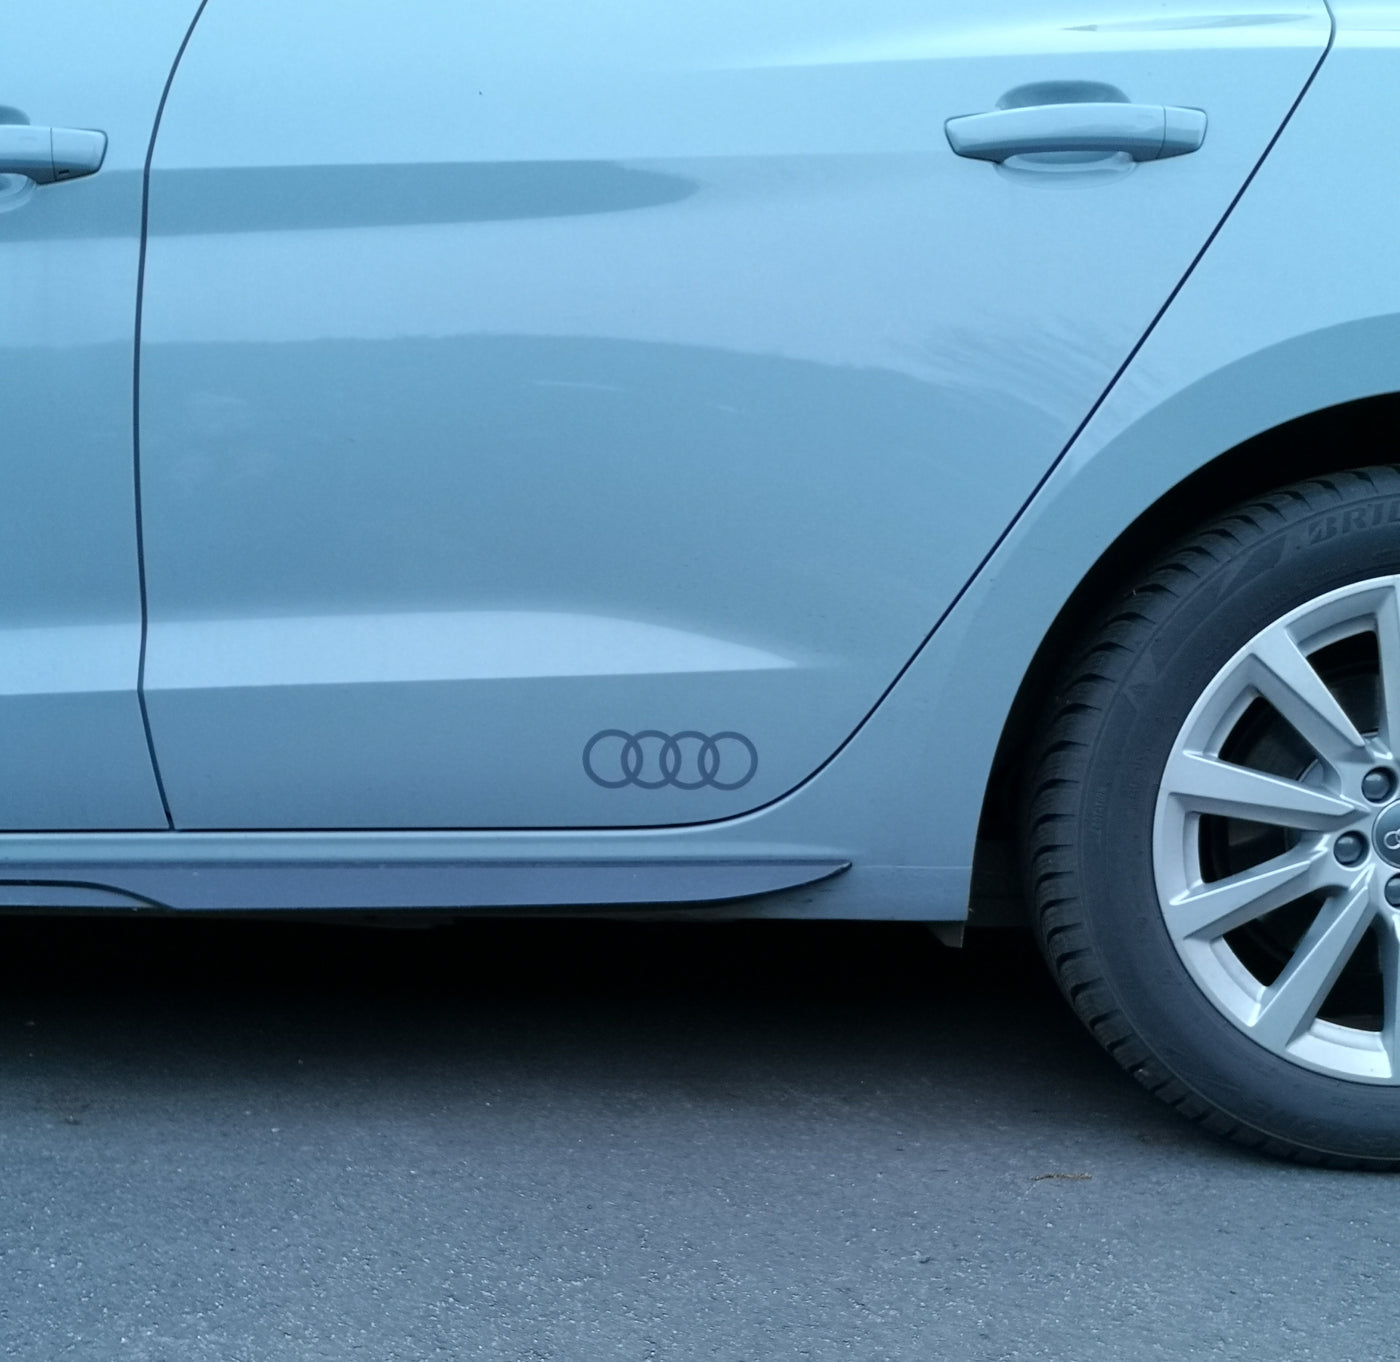 2x Audi Ringe Autoaufkleber Decal Tuning Sticker JDM